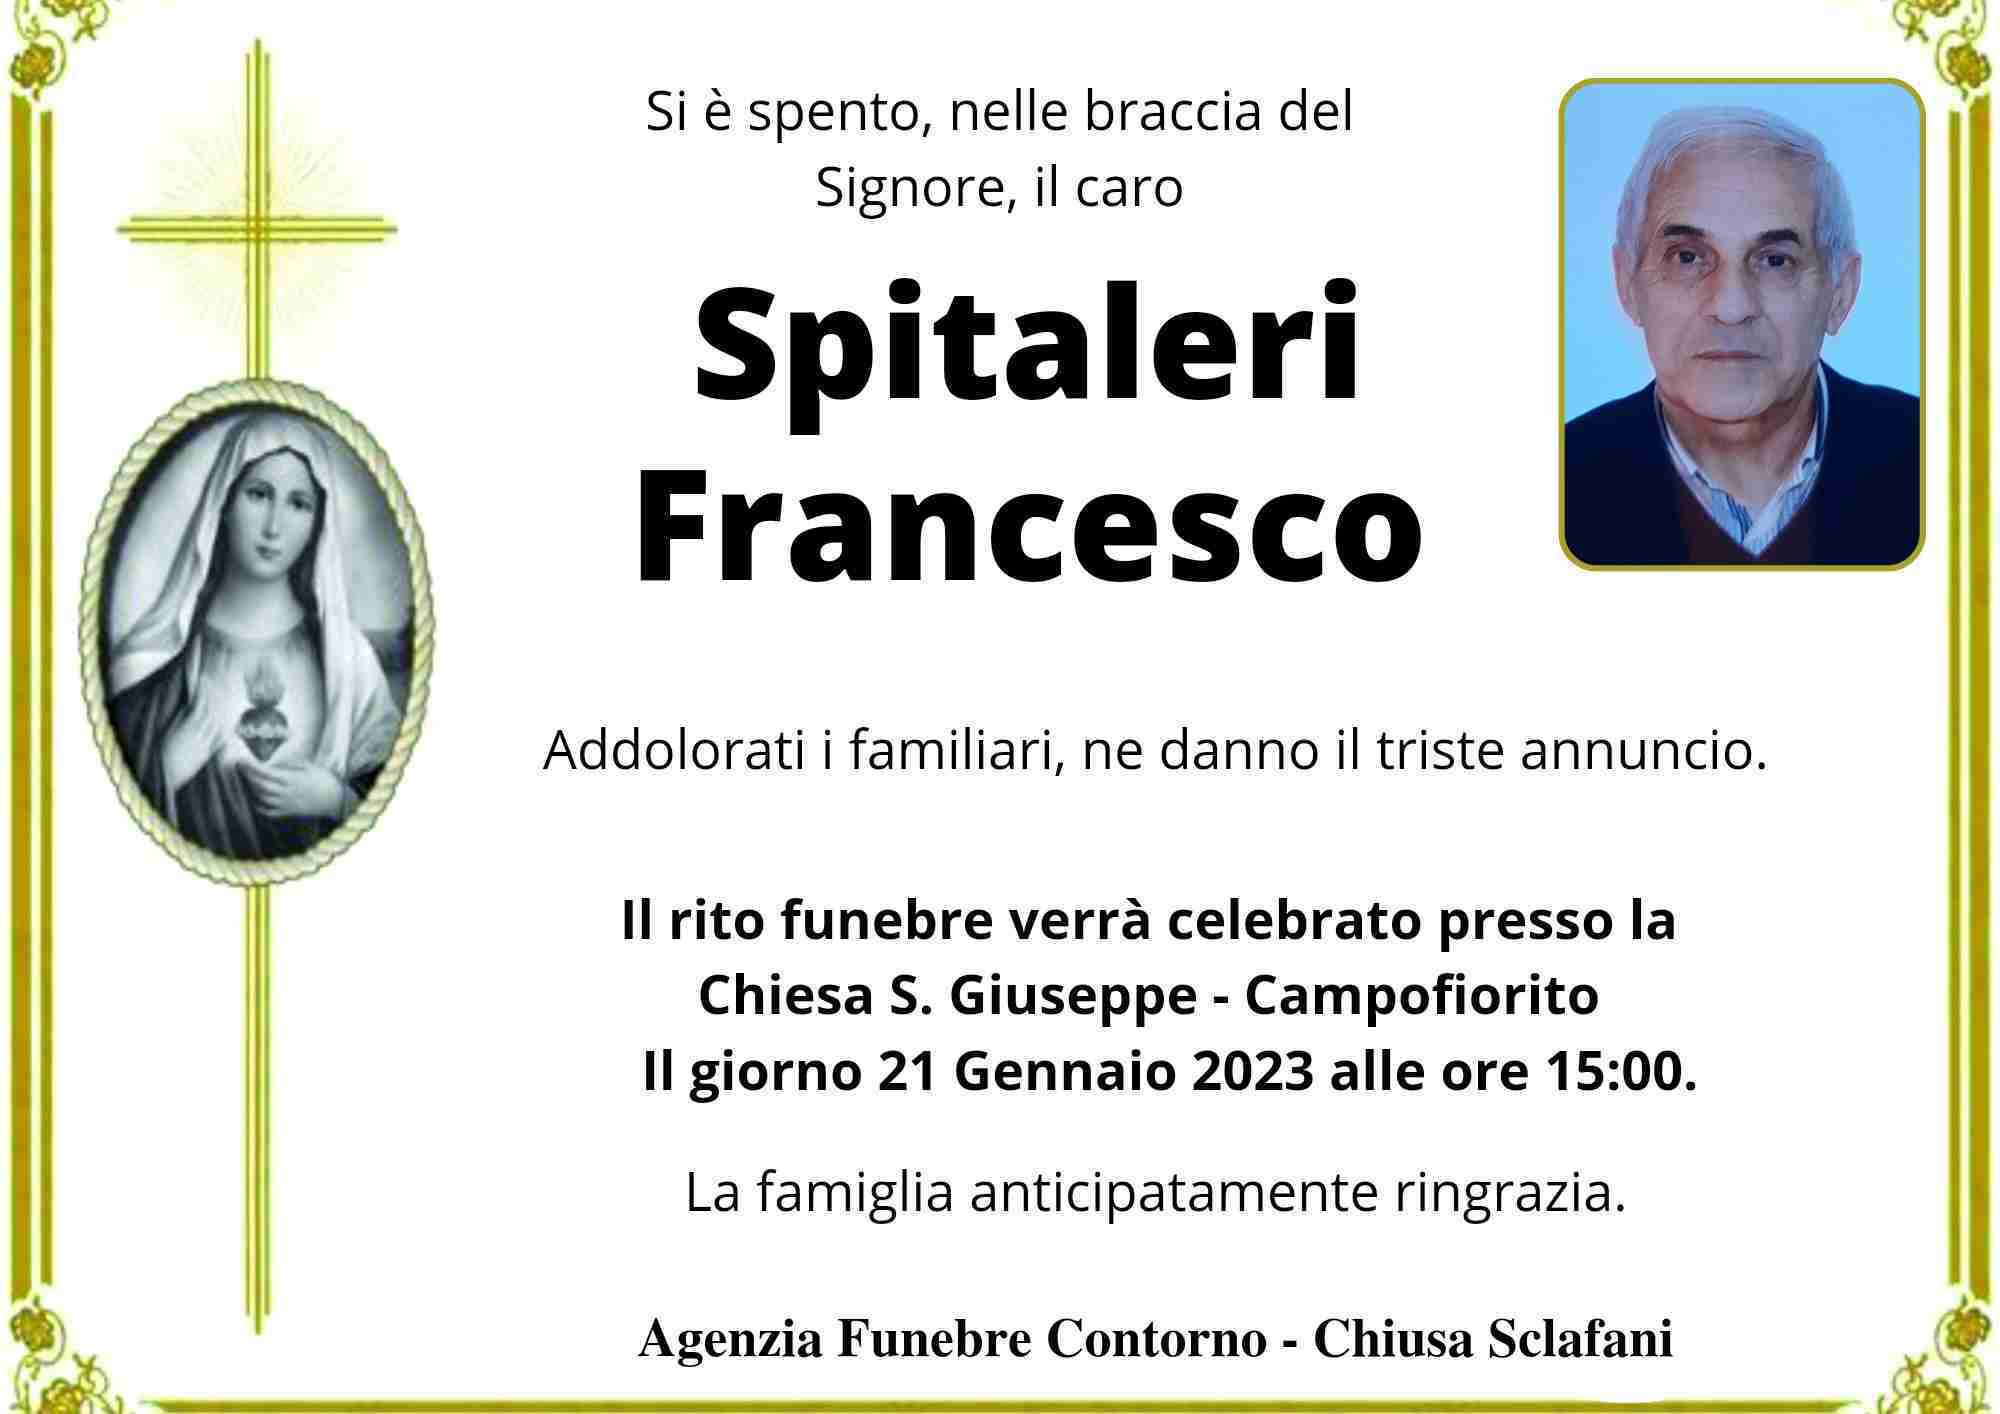 Francesco Spitaleri